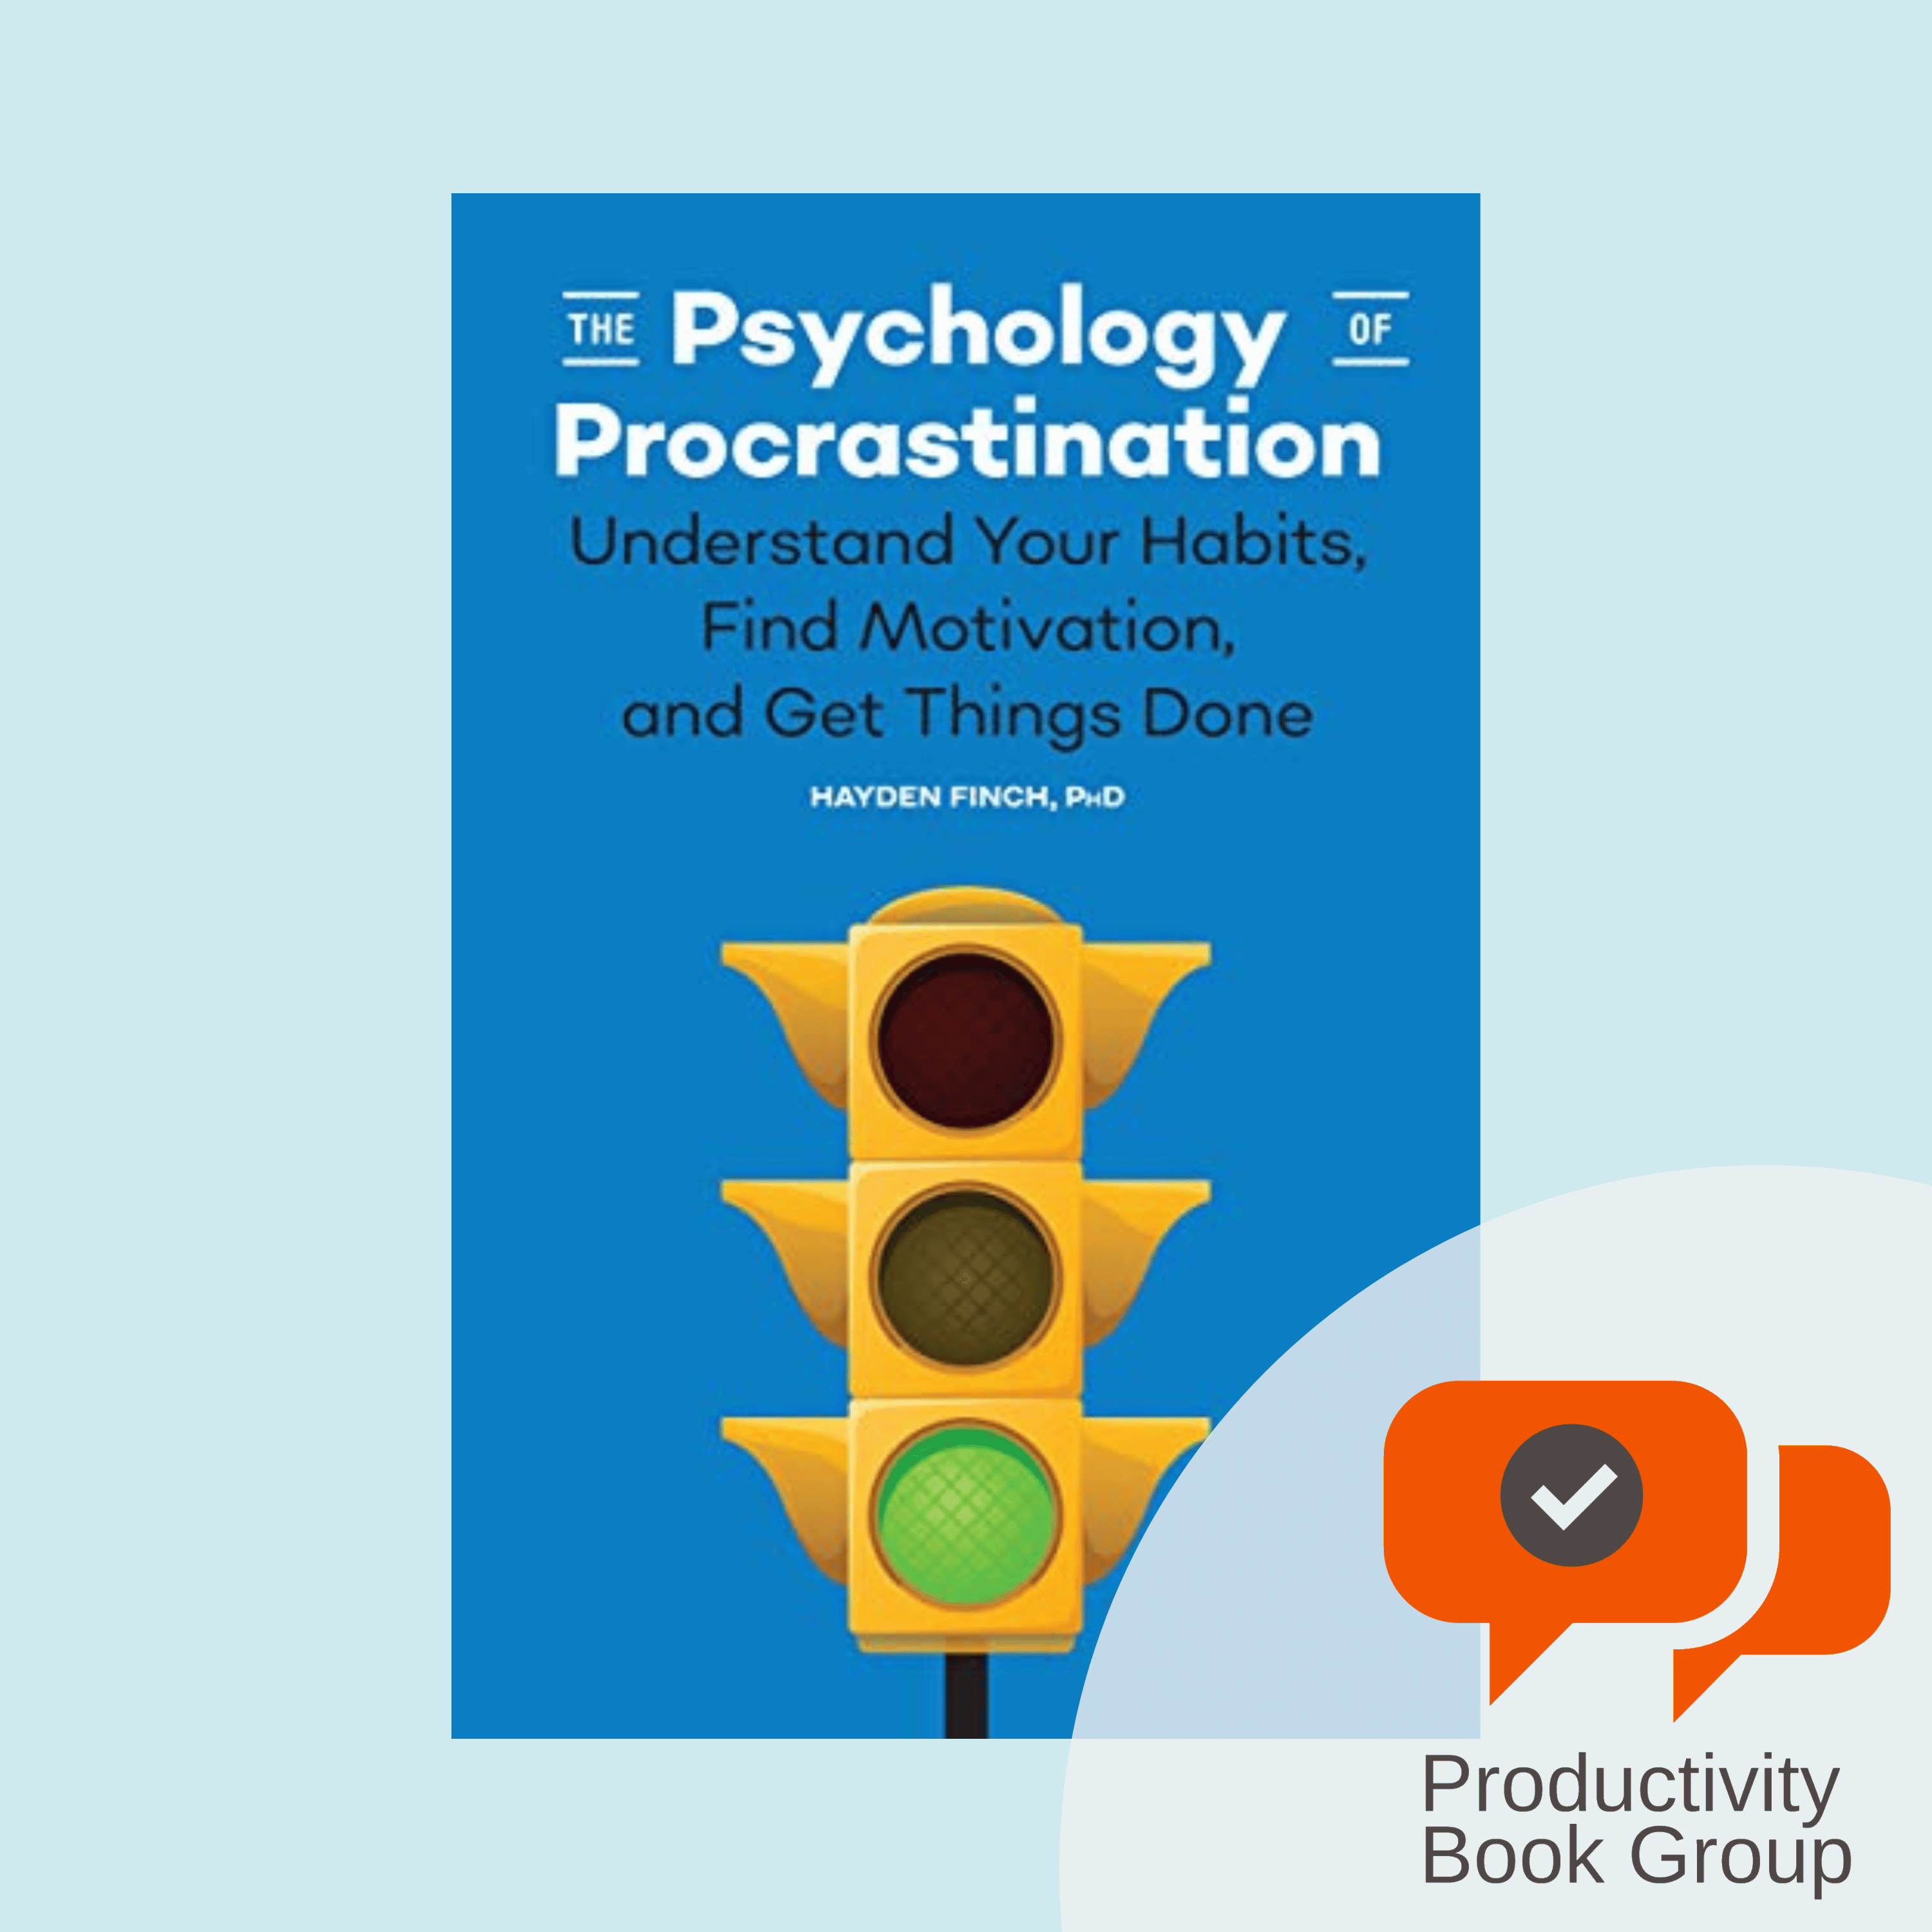 The Psychology of Procrastination – Productivity Book Group